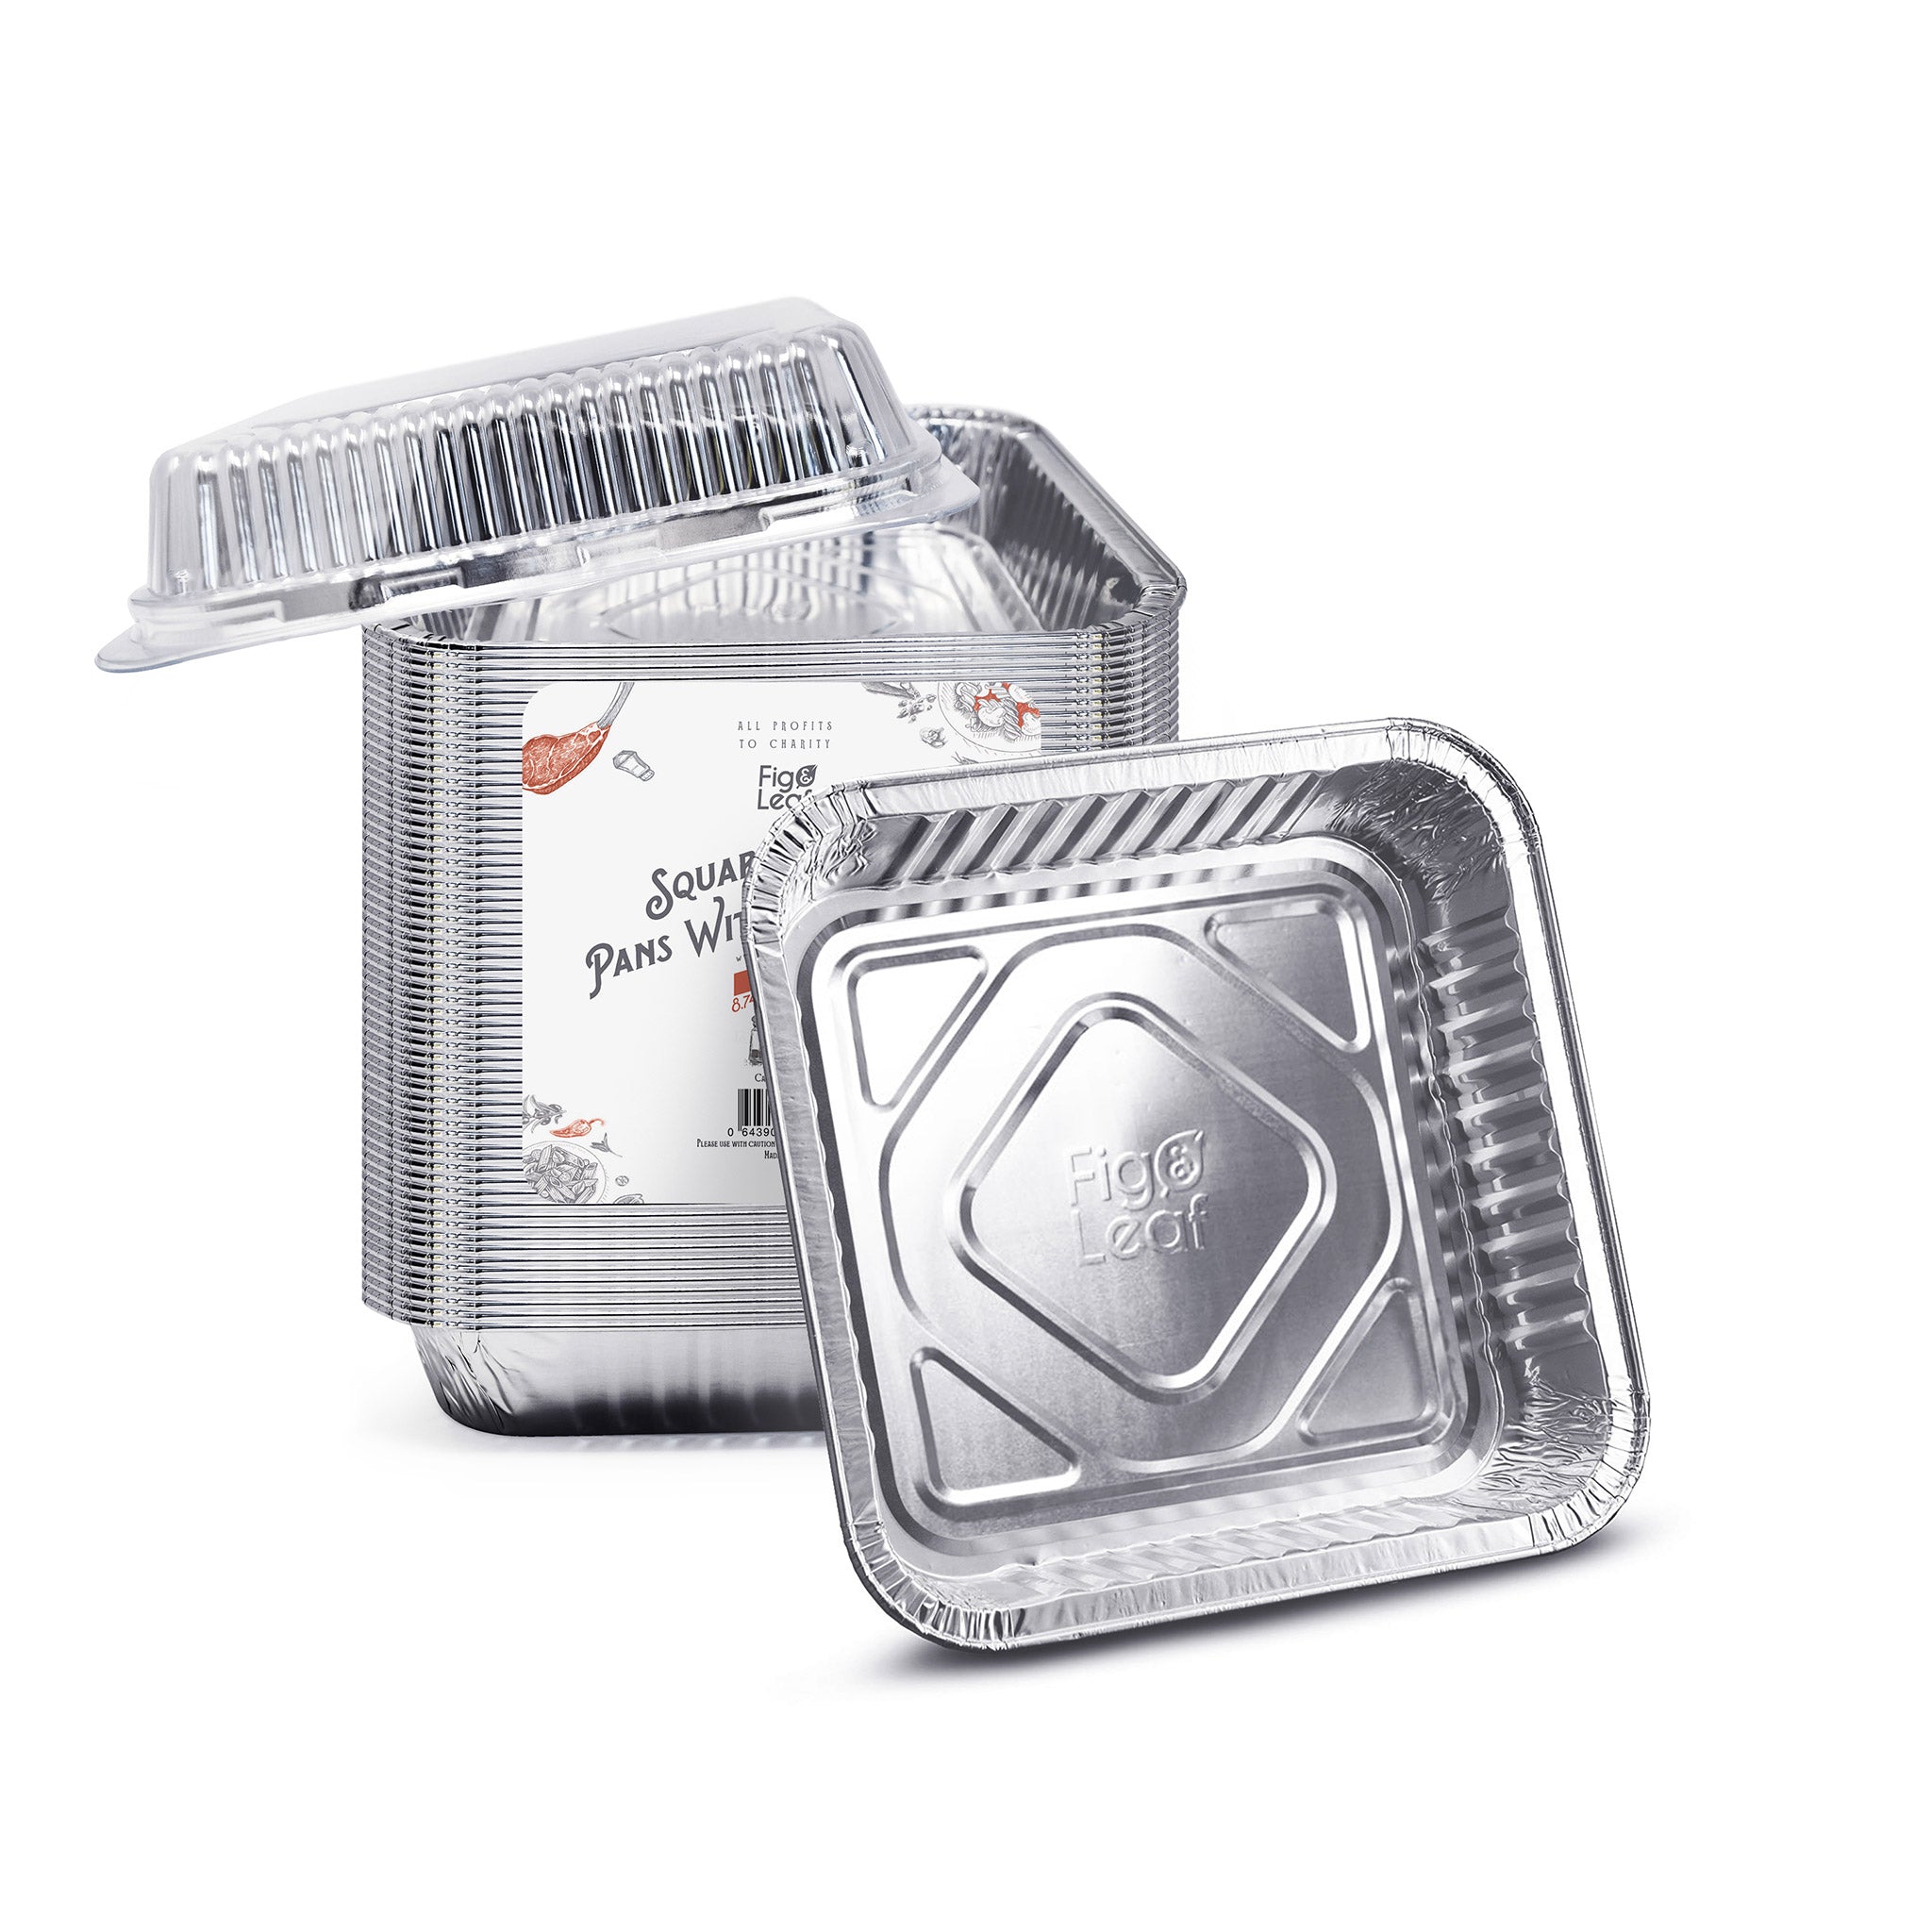 8 Square Disposable Aluminum Baking Pan #1155NL